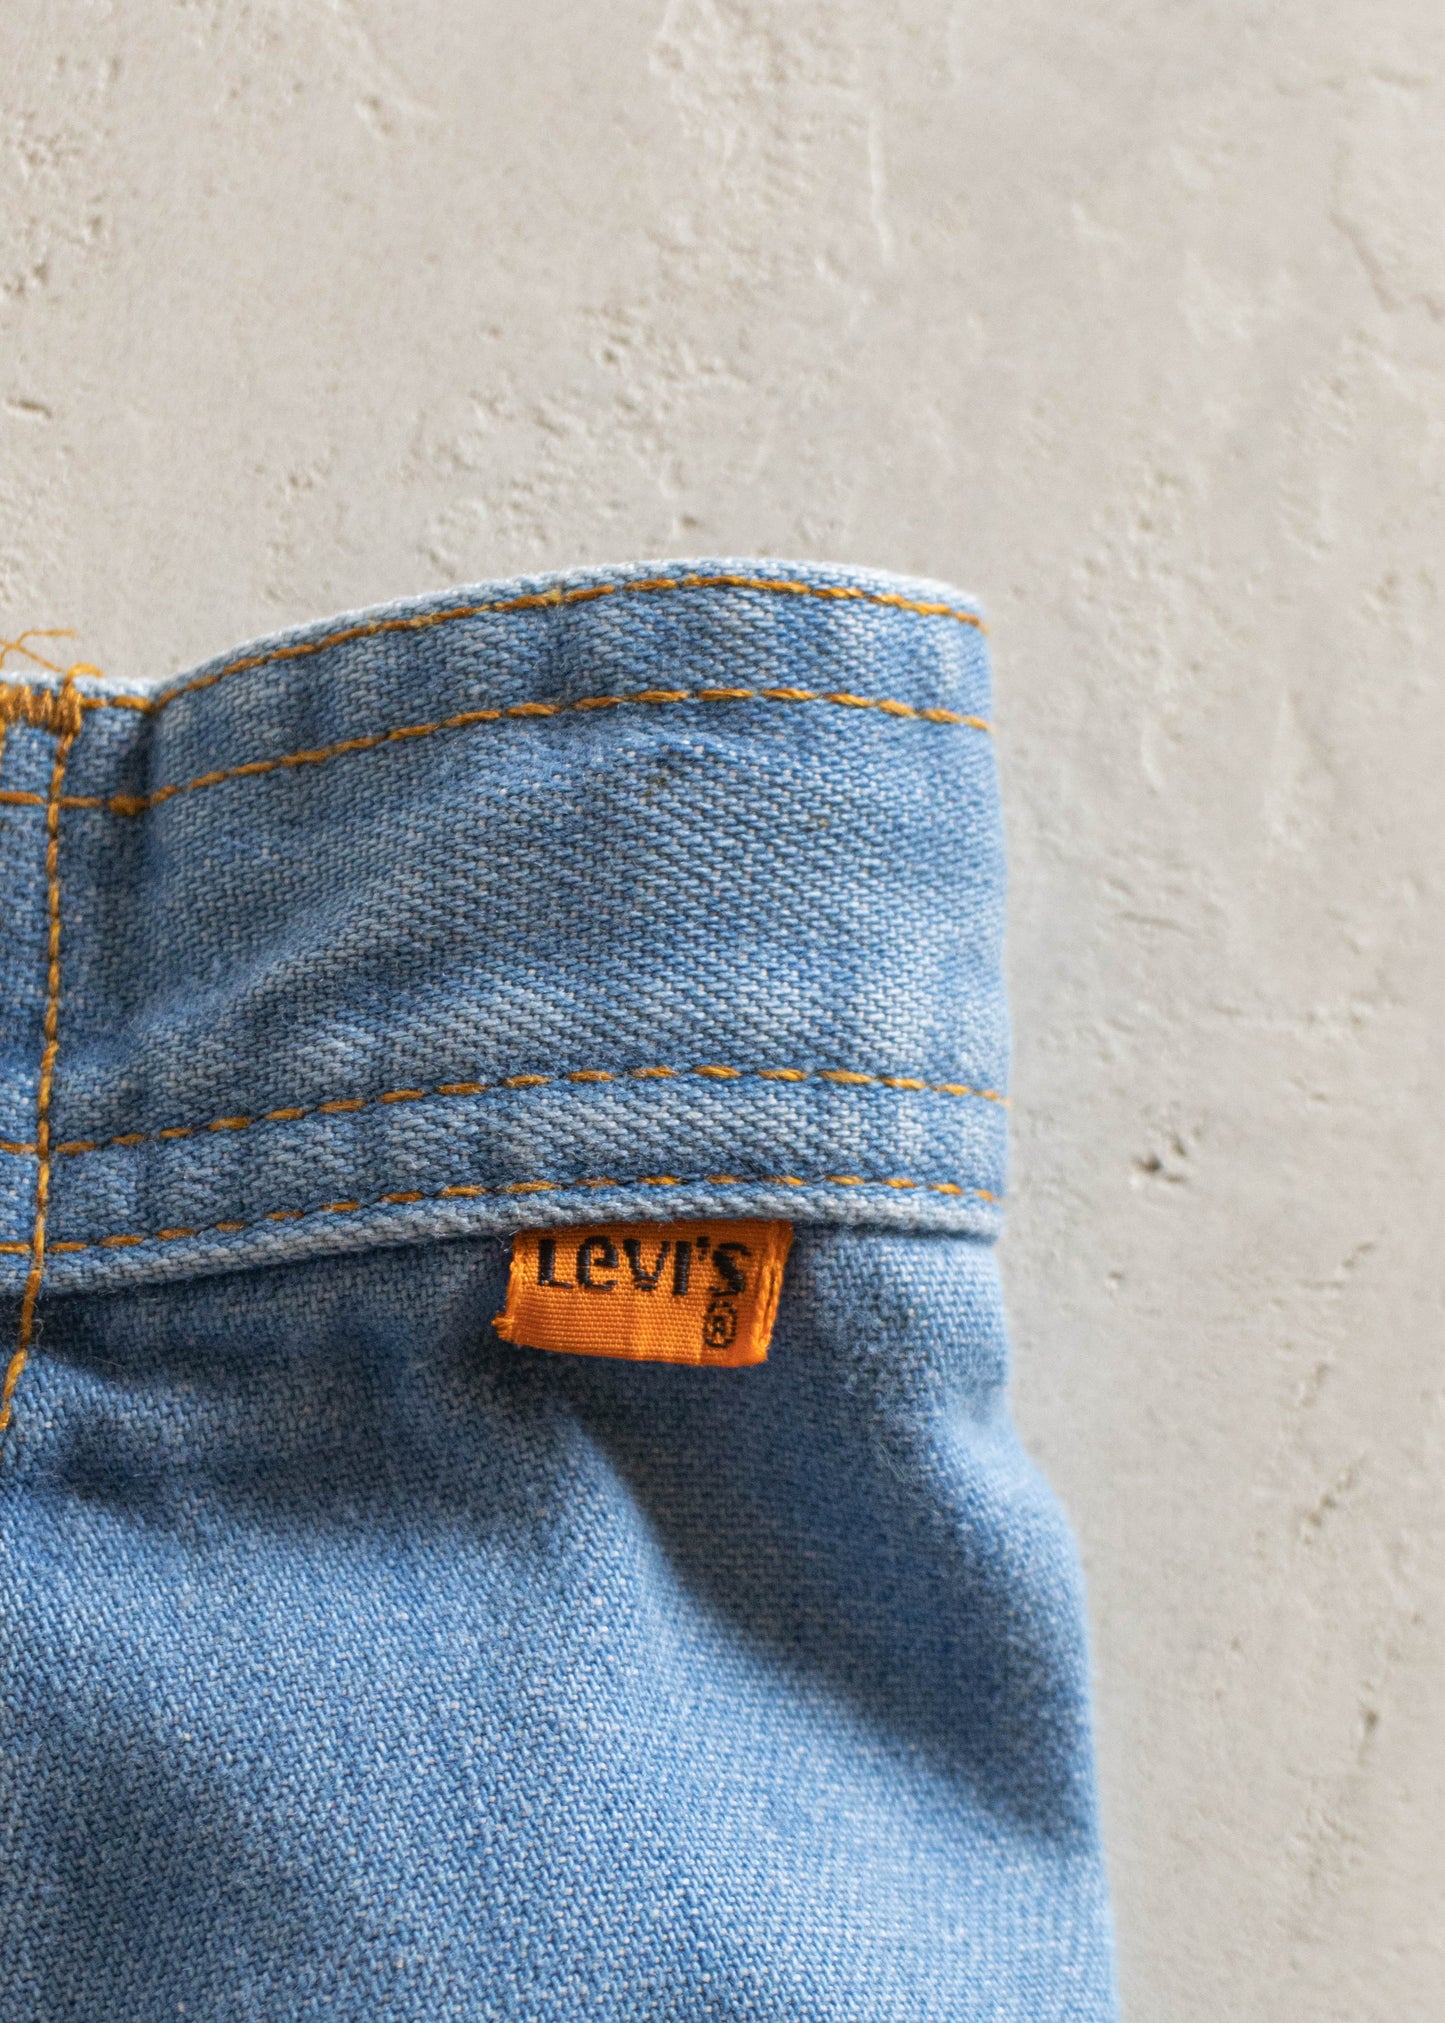 1980s Levi's Orange Tab Denim Trousers Size Women's 33 Men's 36